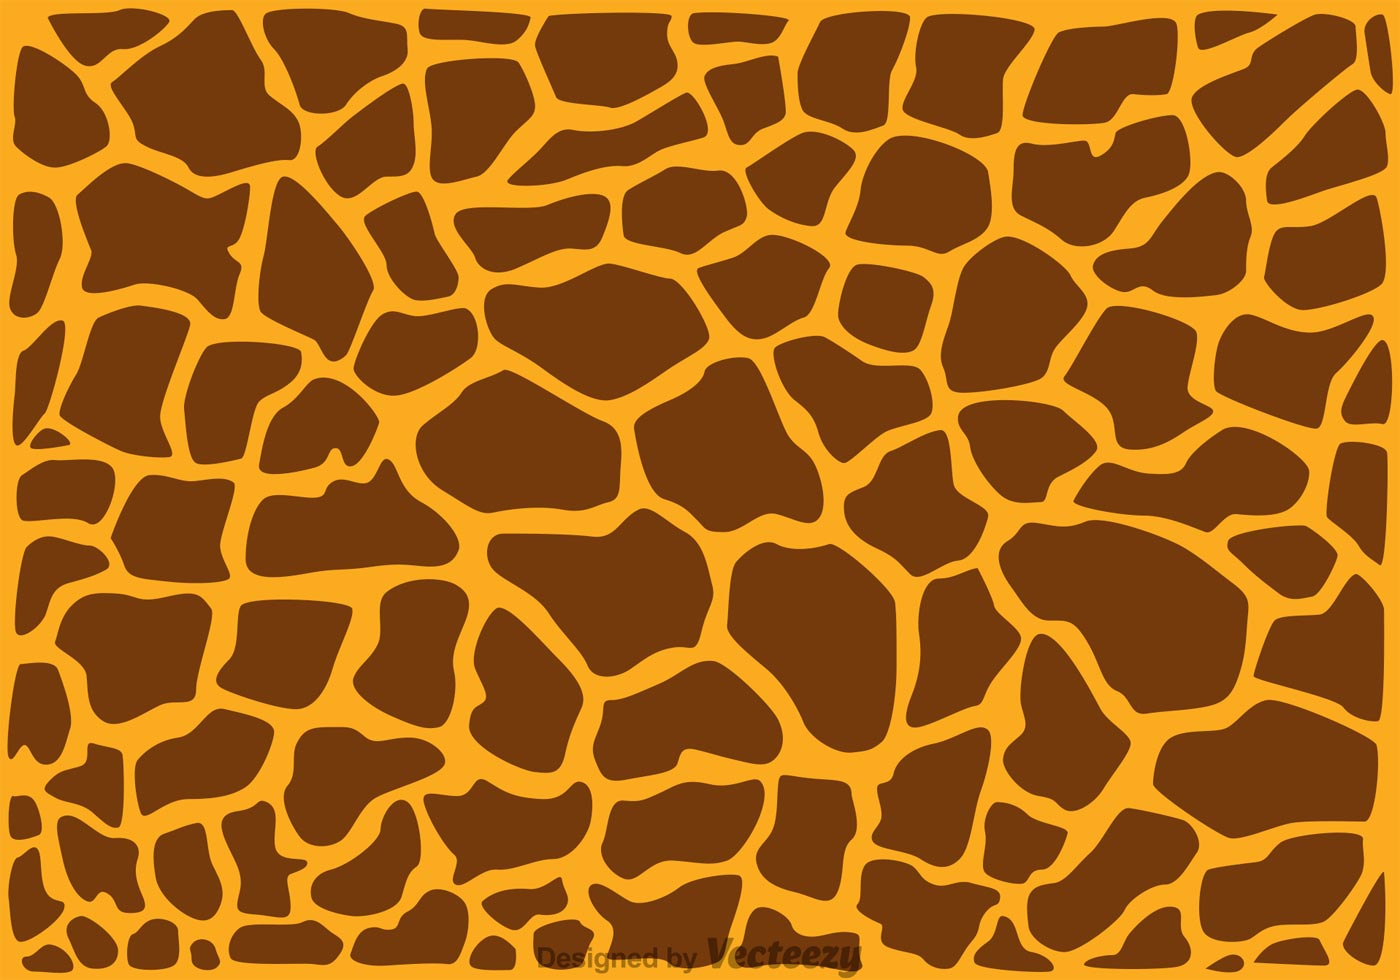 Giraffe background